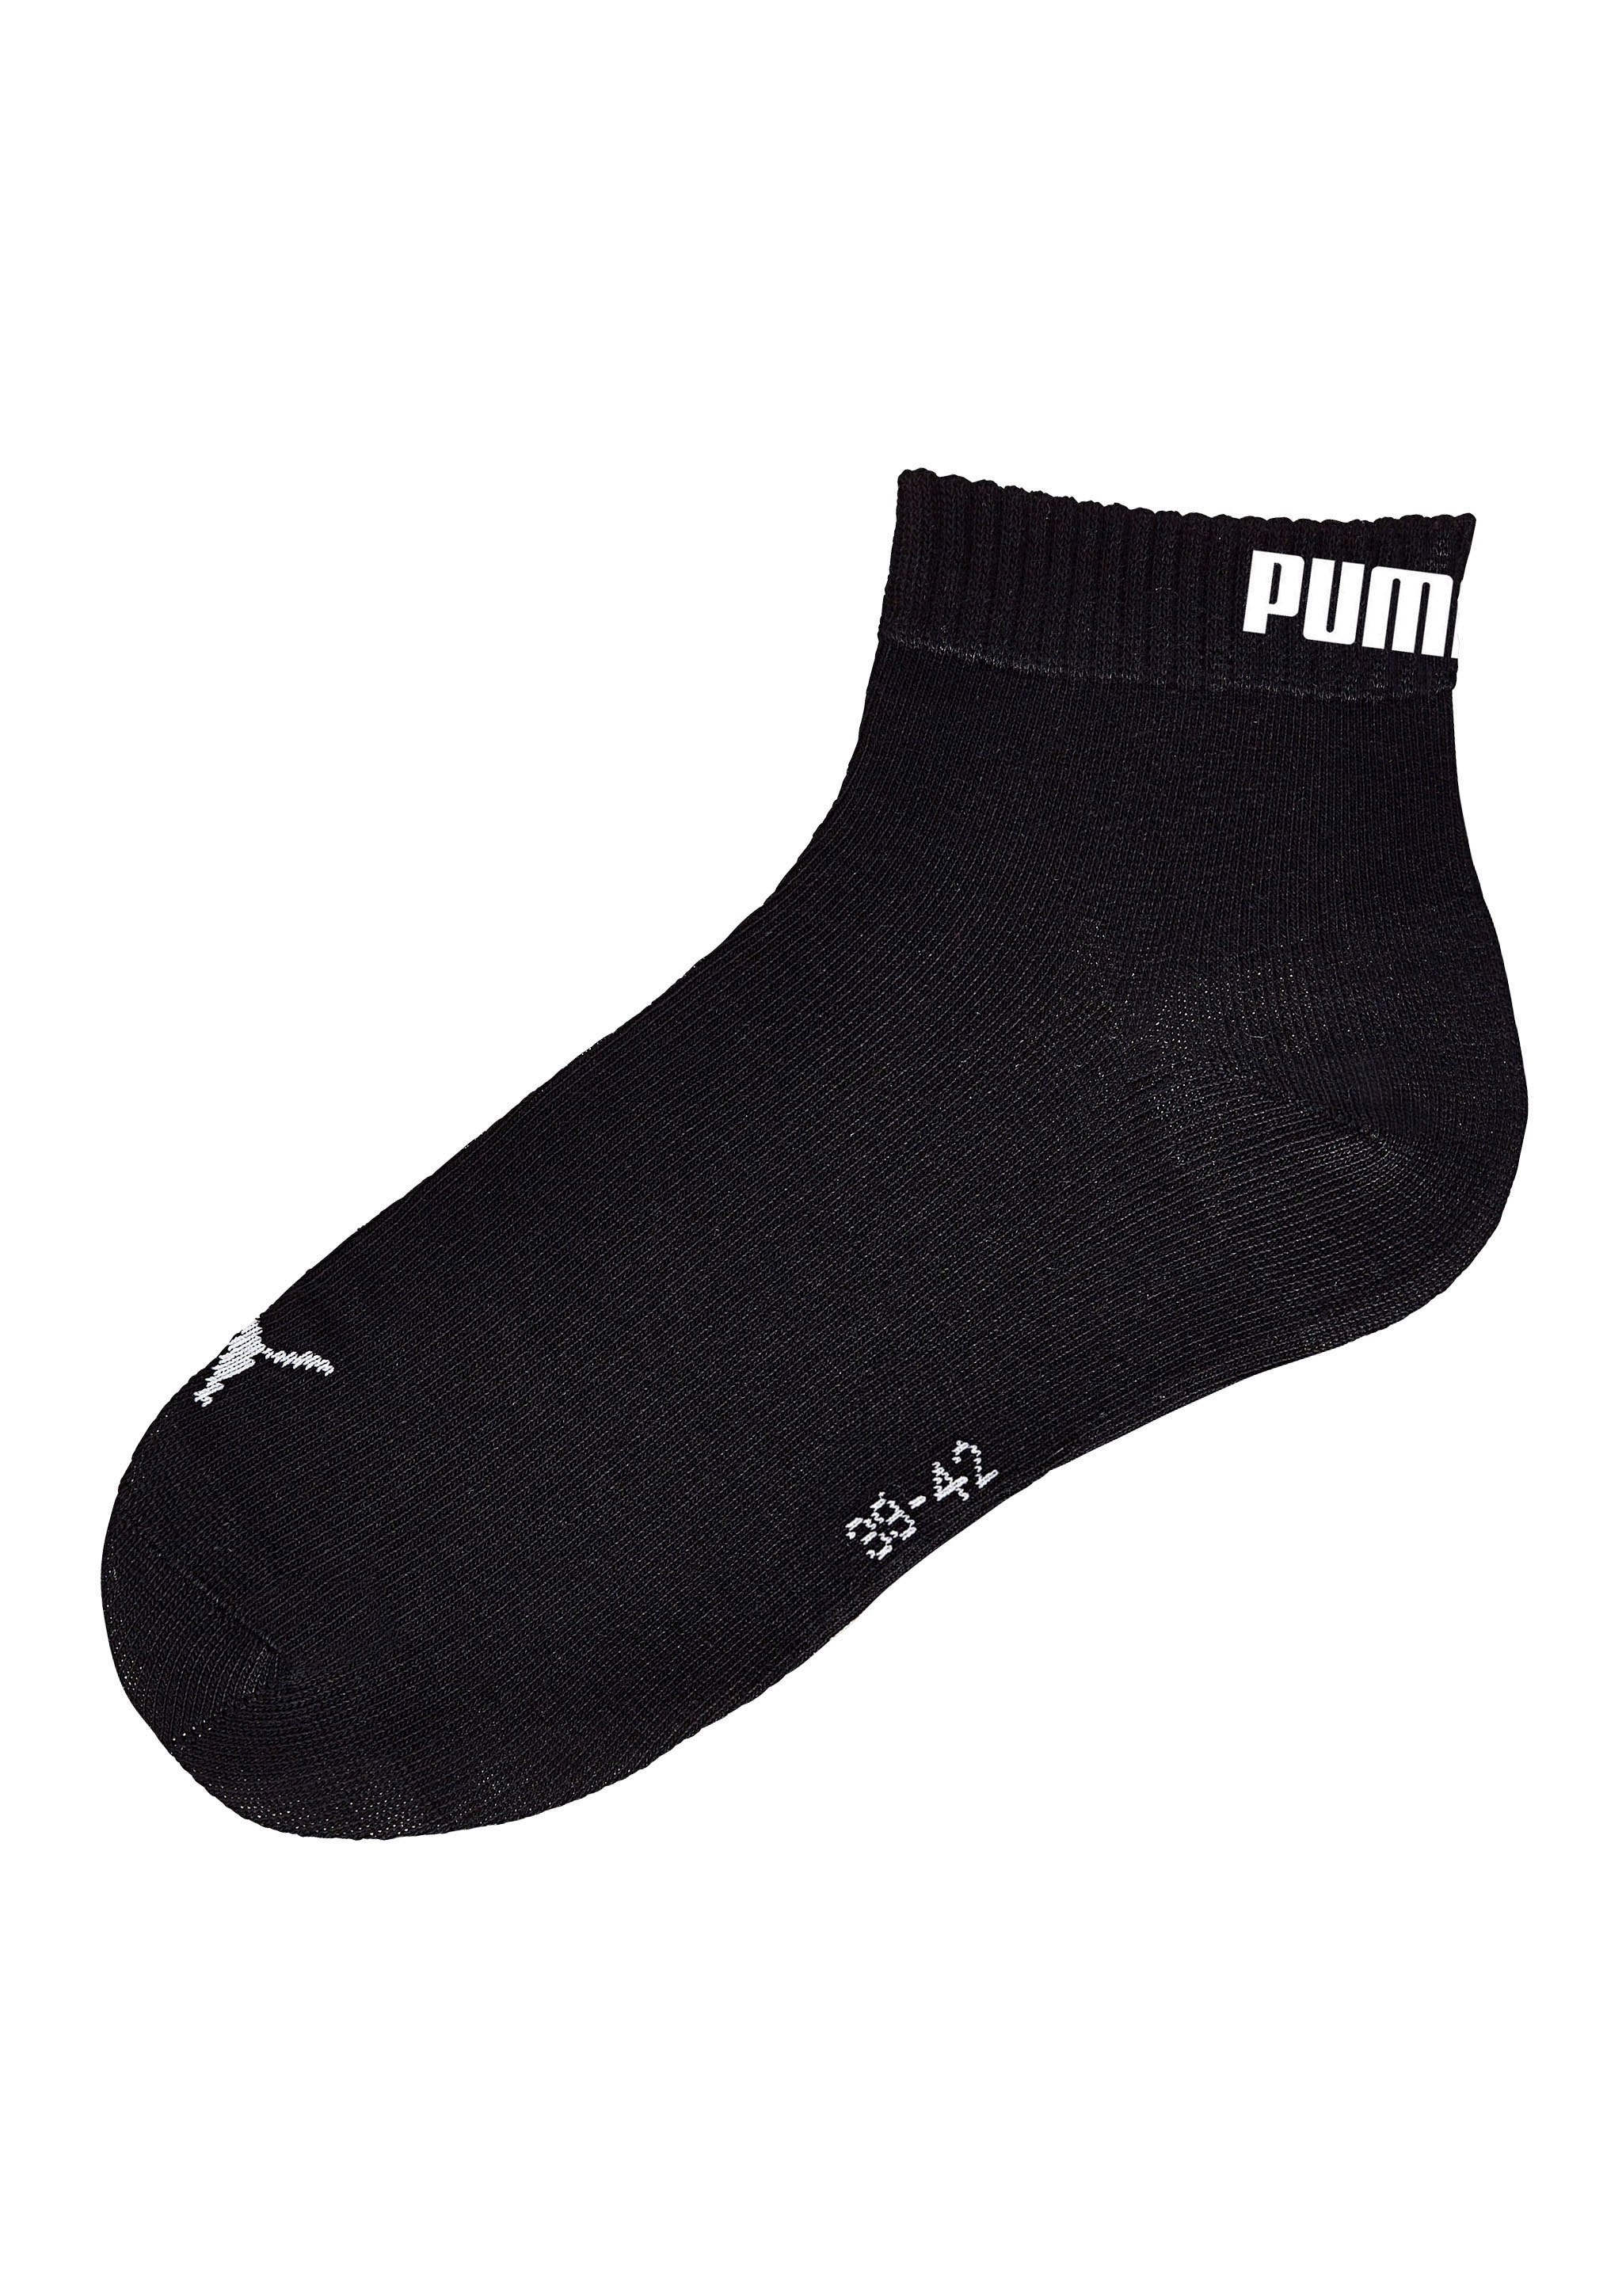 bestellen Puma bequem Socken online